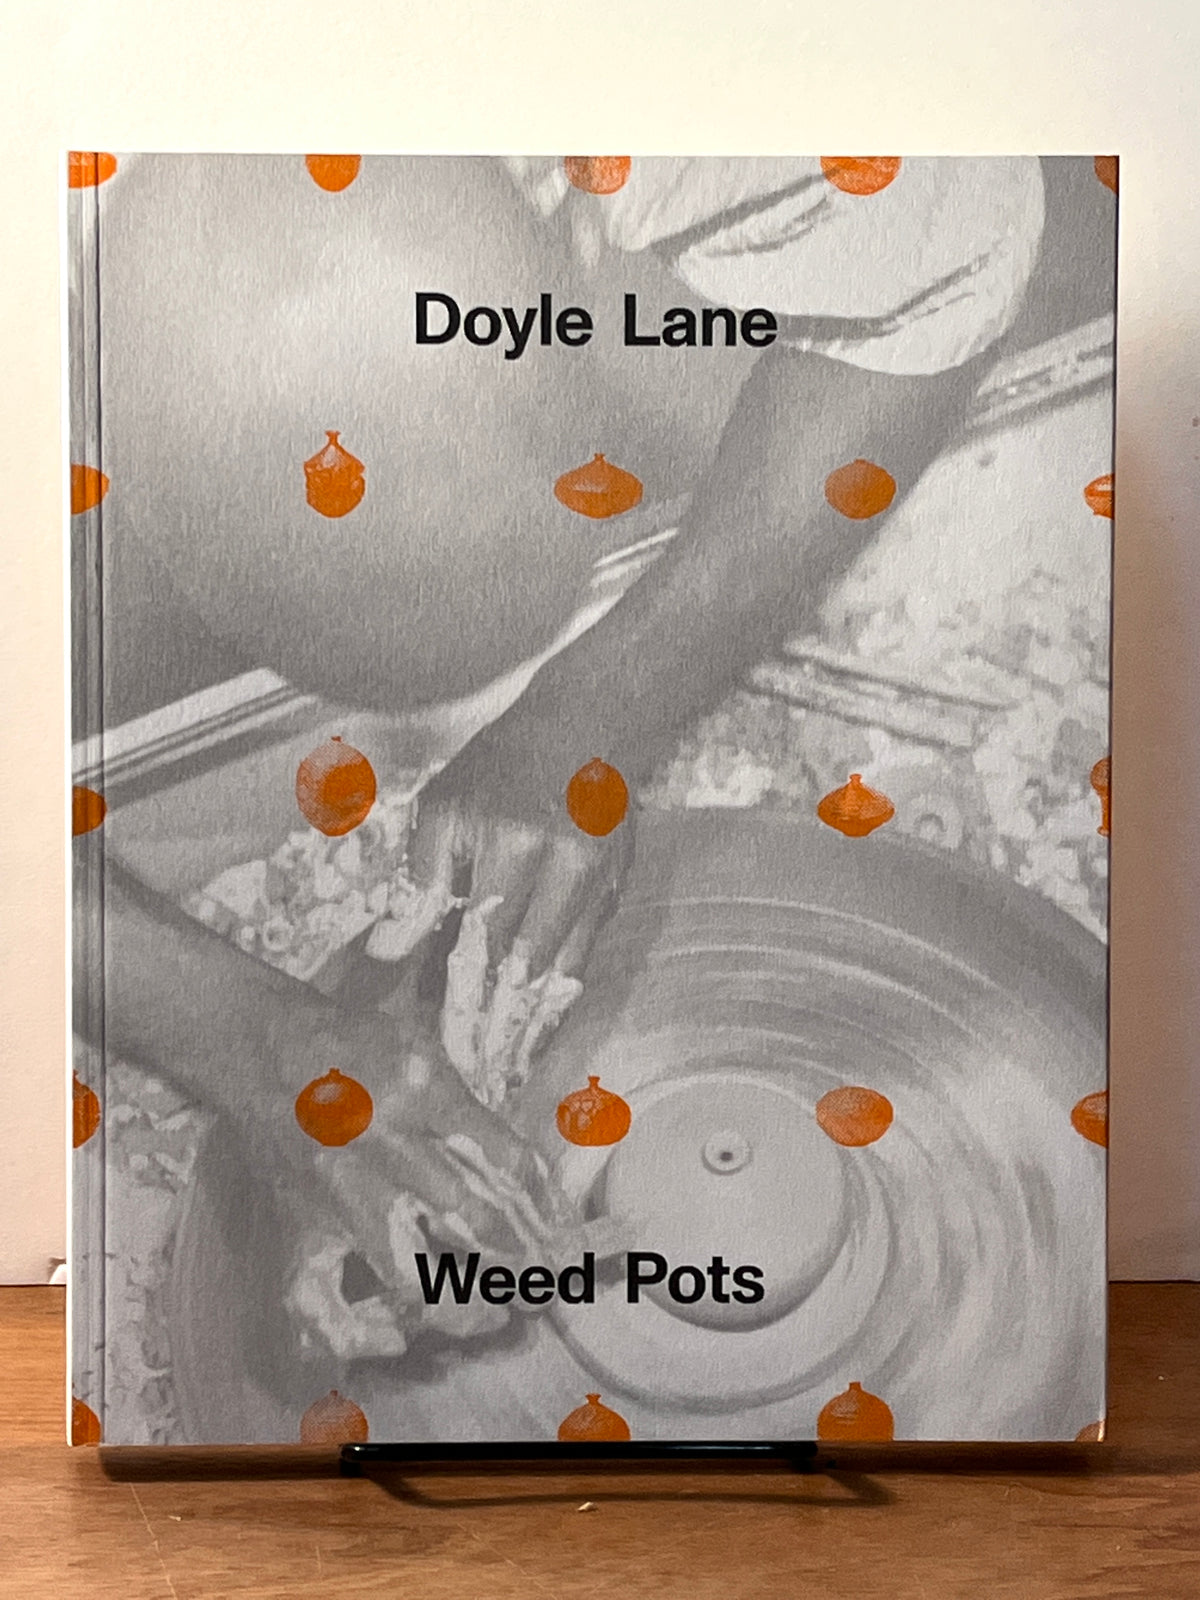 Doyle Lane: Weed Pots, David Kordansky Gallery, 2020, 1/1500, Fine